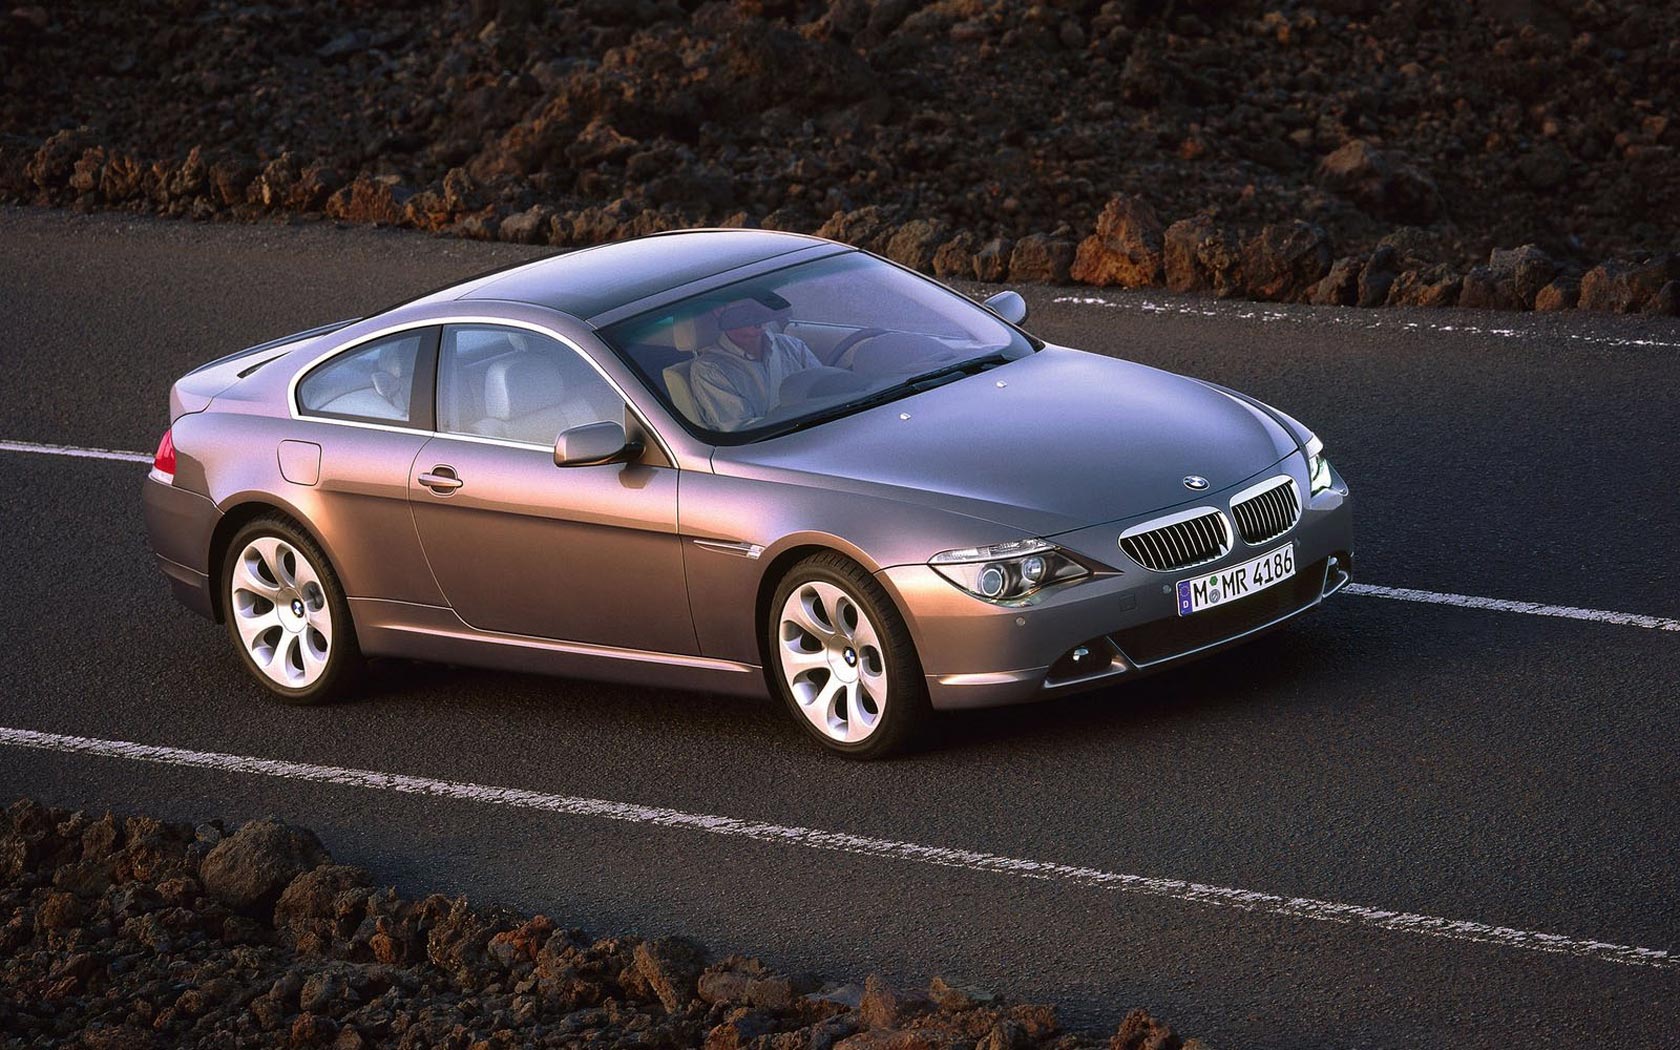  BMW 6-series (2004-2007)